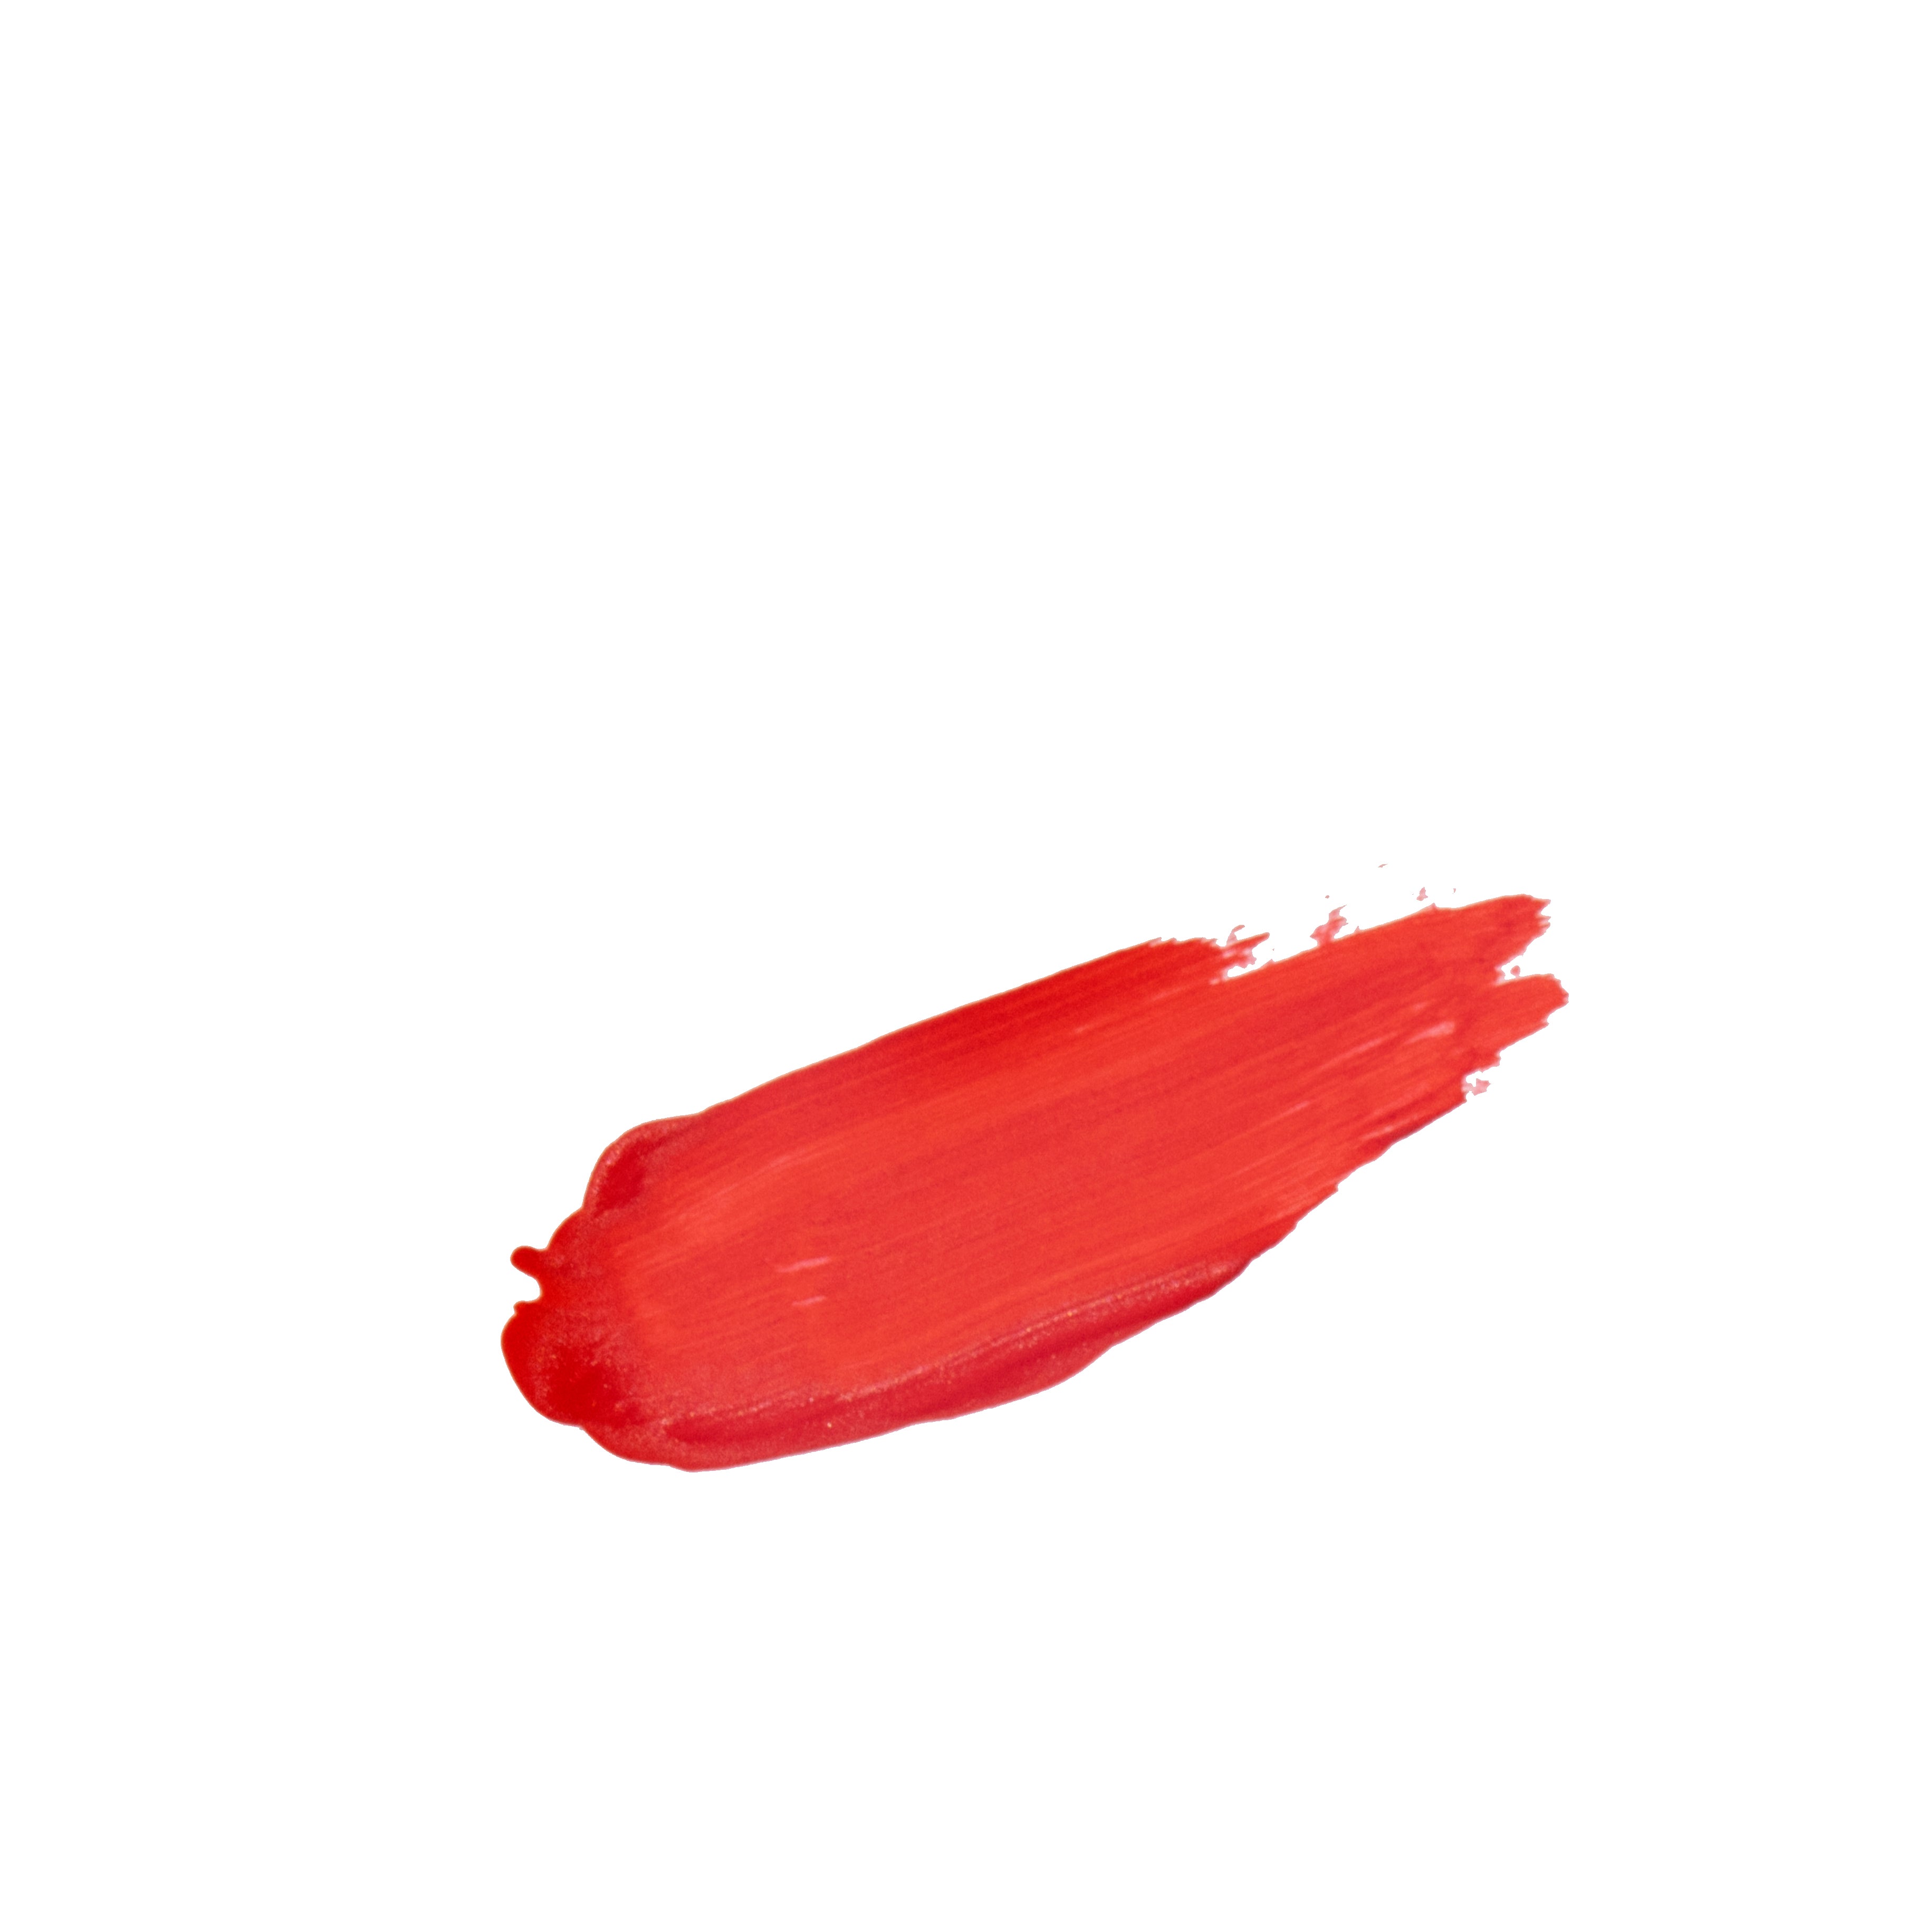 Lipstick  Liquid Long Lasting Matte Red "My Favorite Lips"